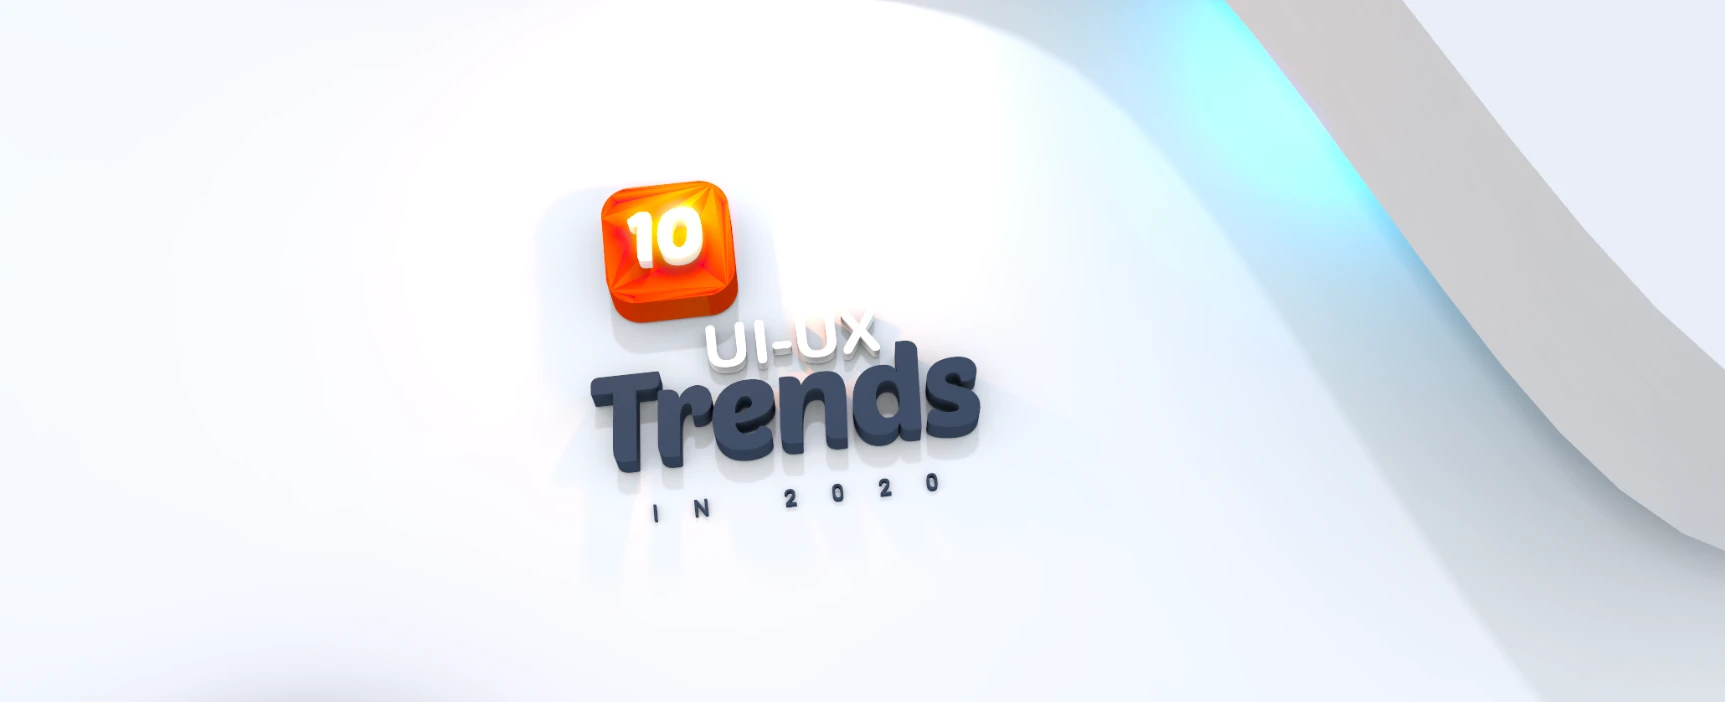 10 UI-UX design trends in 2020